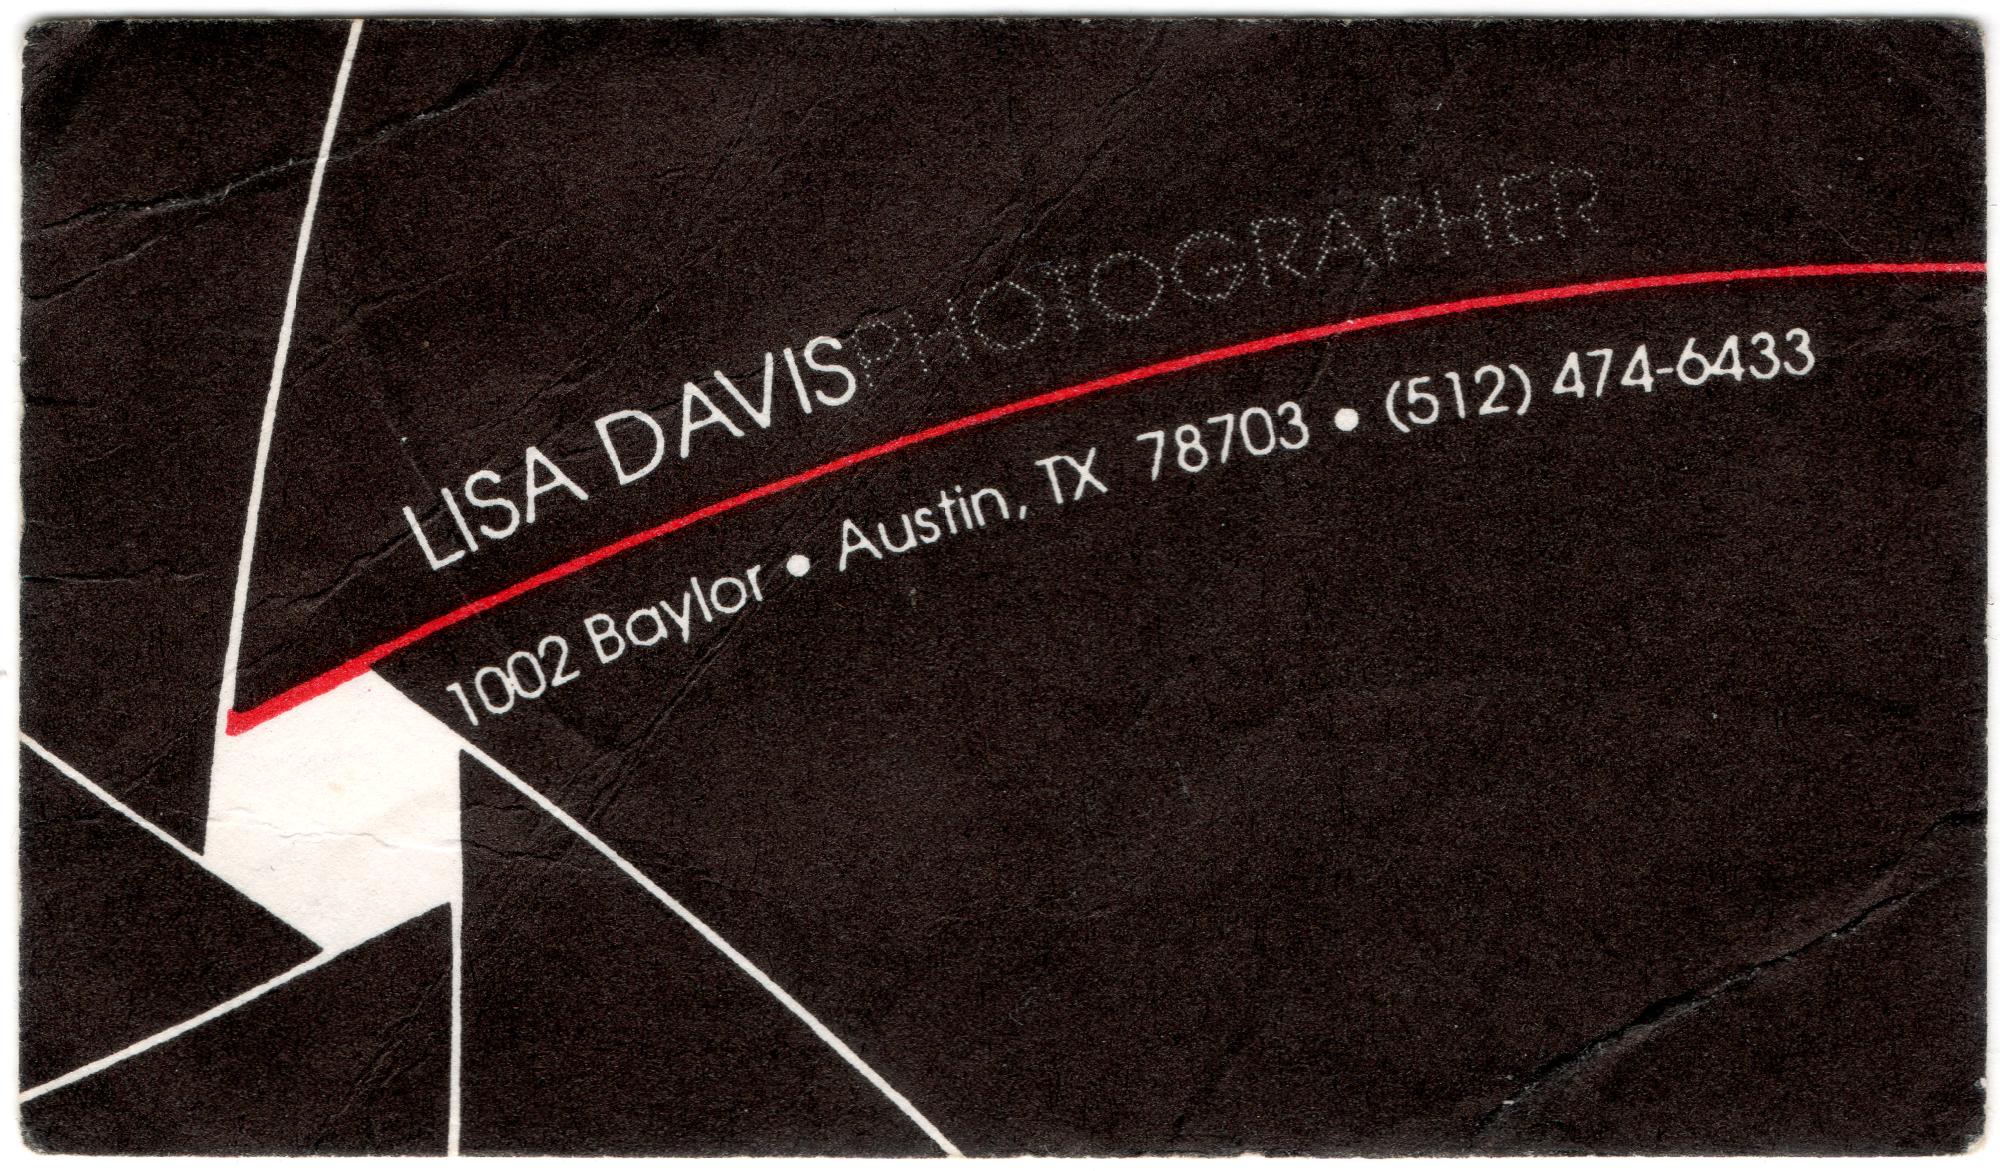 Texas (Black & White) - Bus Card Lisa Davis